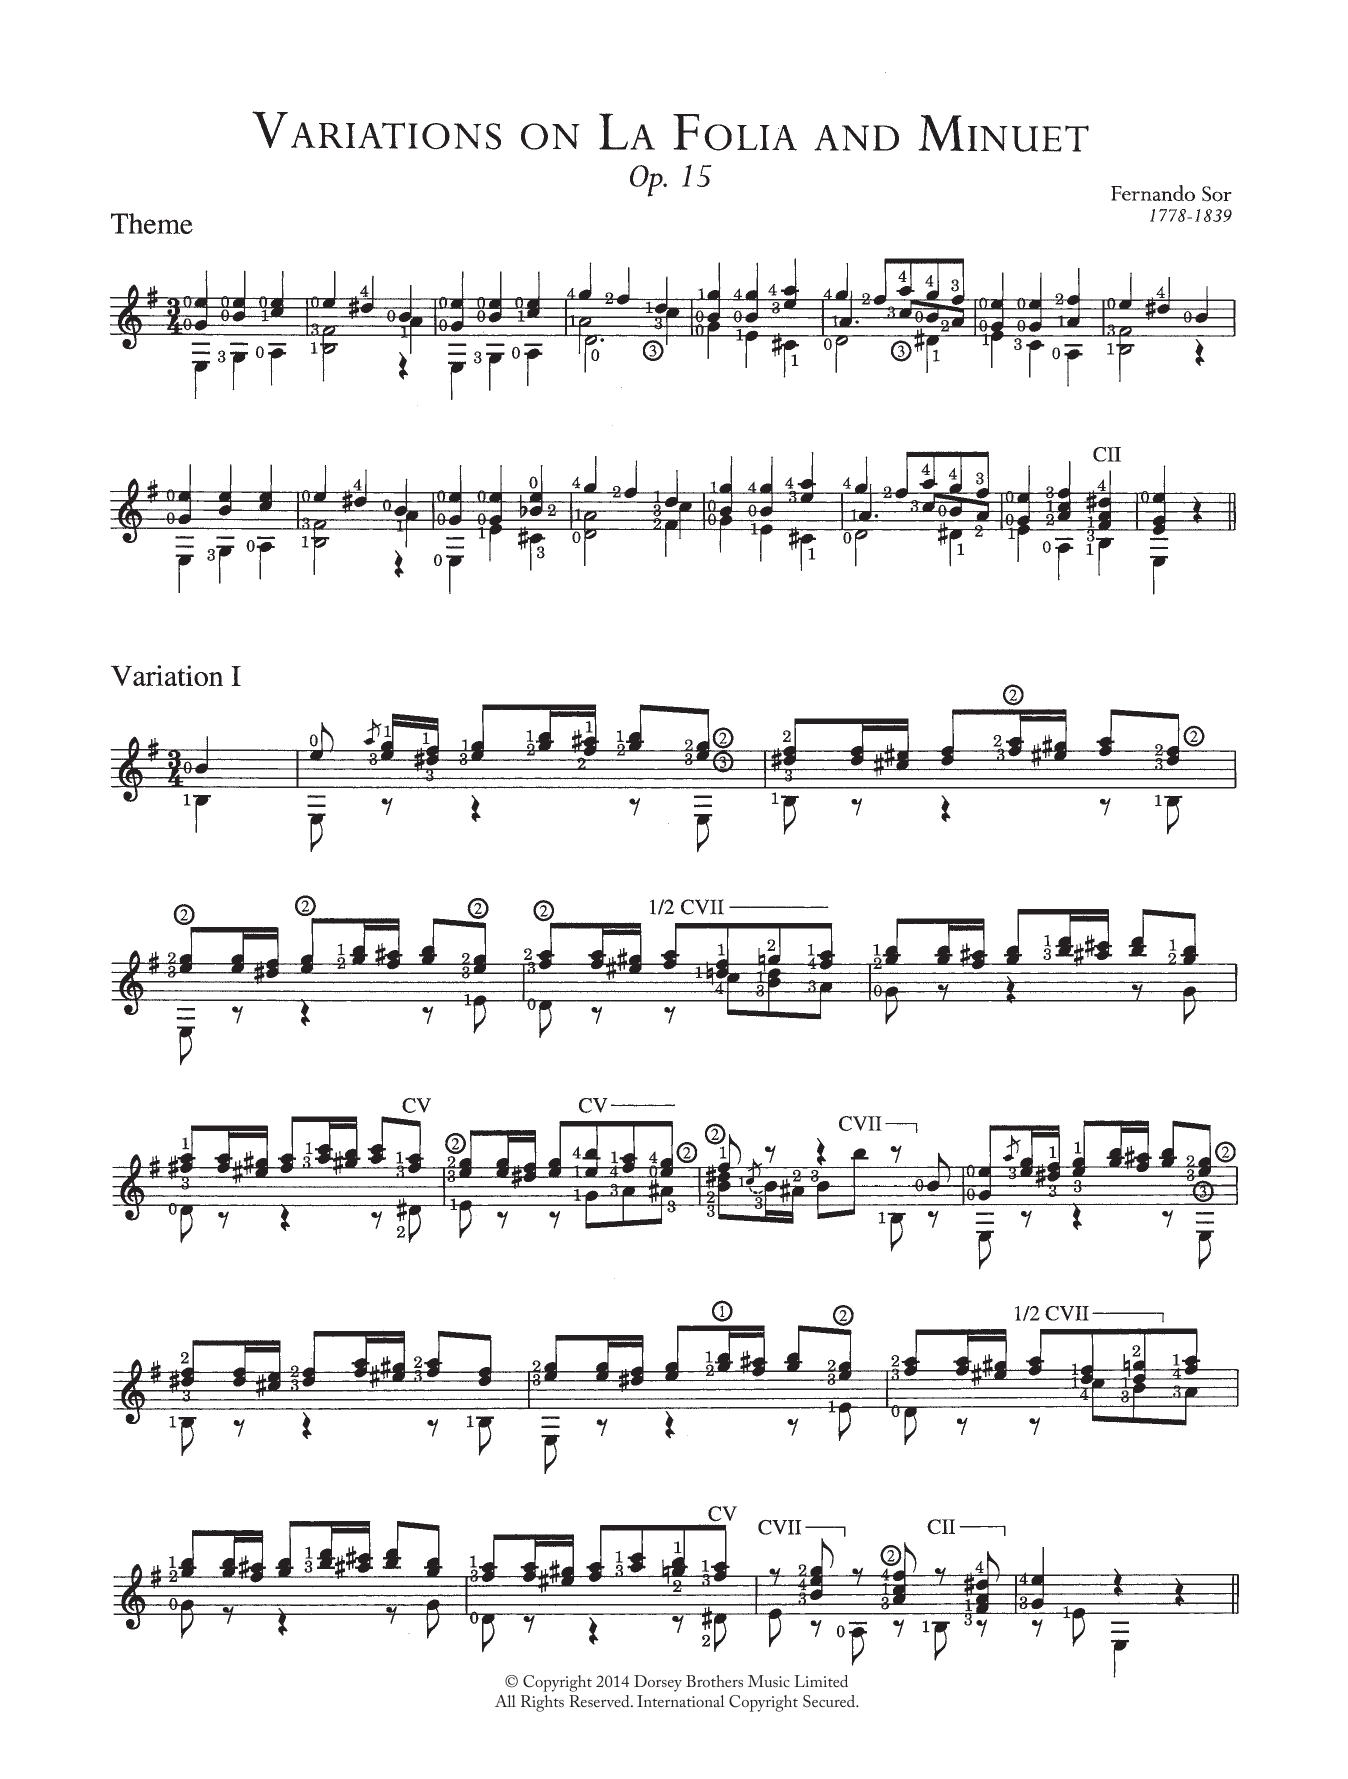 Fernando Sor Variations On La Folia And Minuet, Op.15 Sheet Music Notes & Chords for Guitar - Download or Print PDF